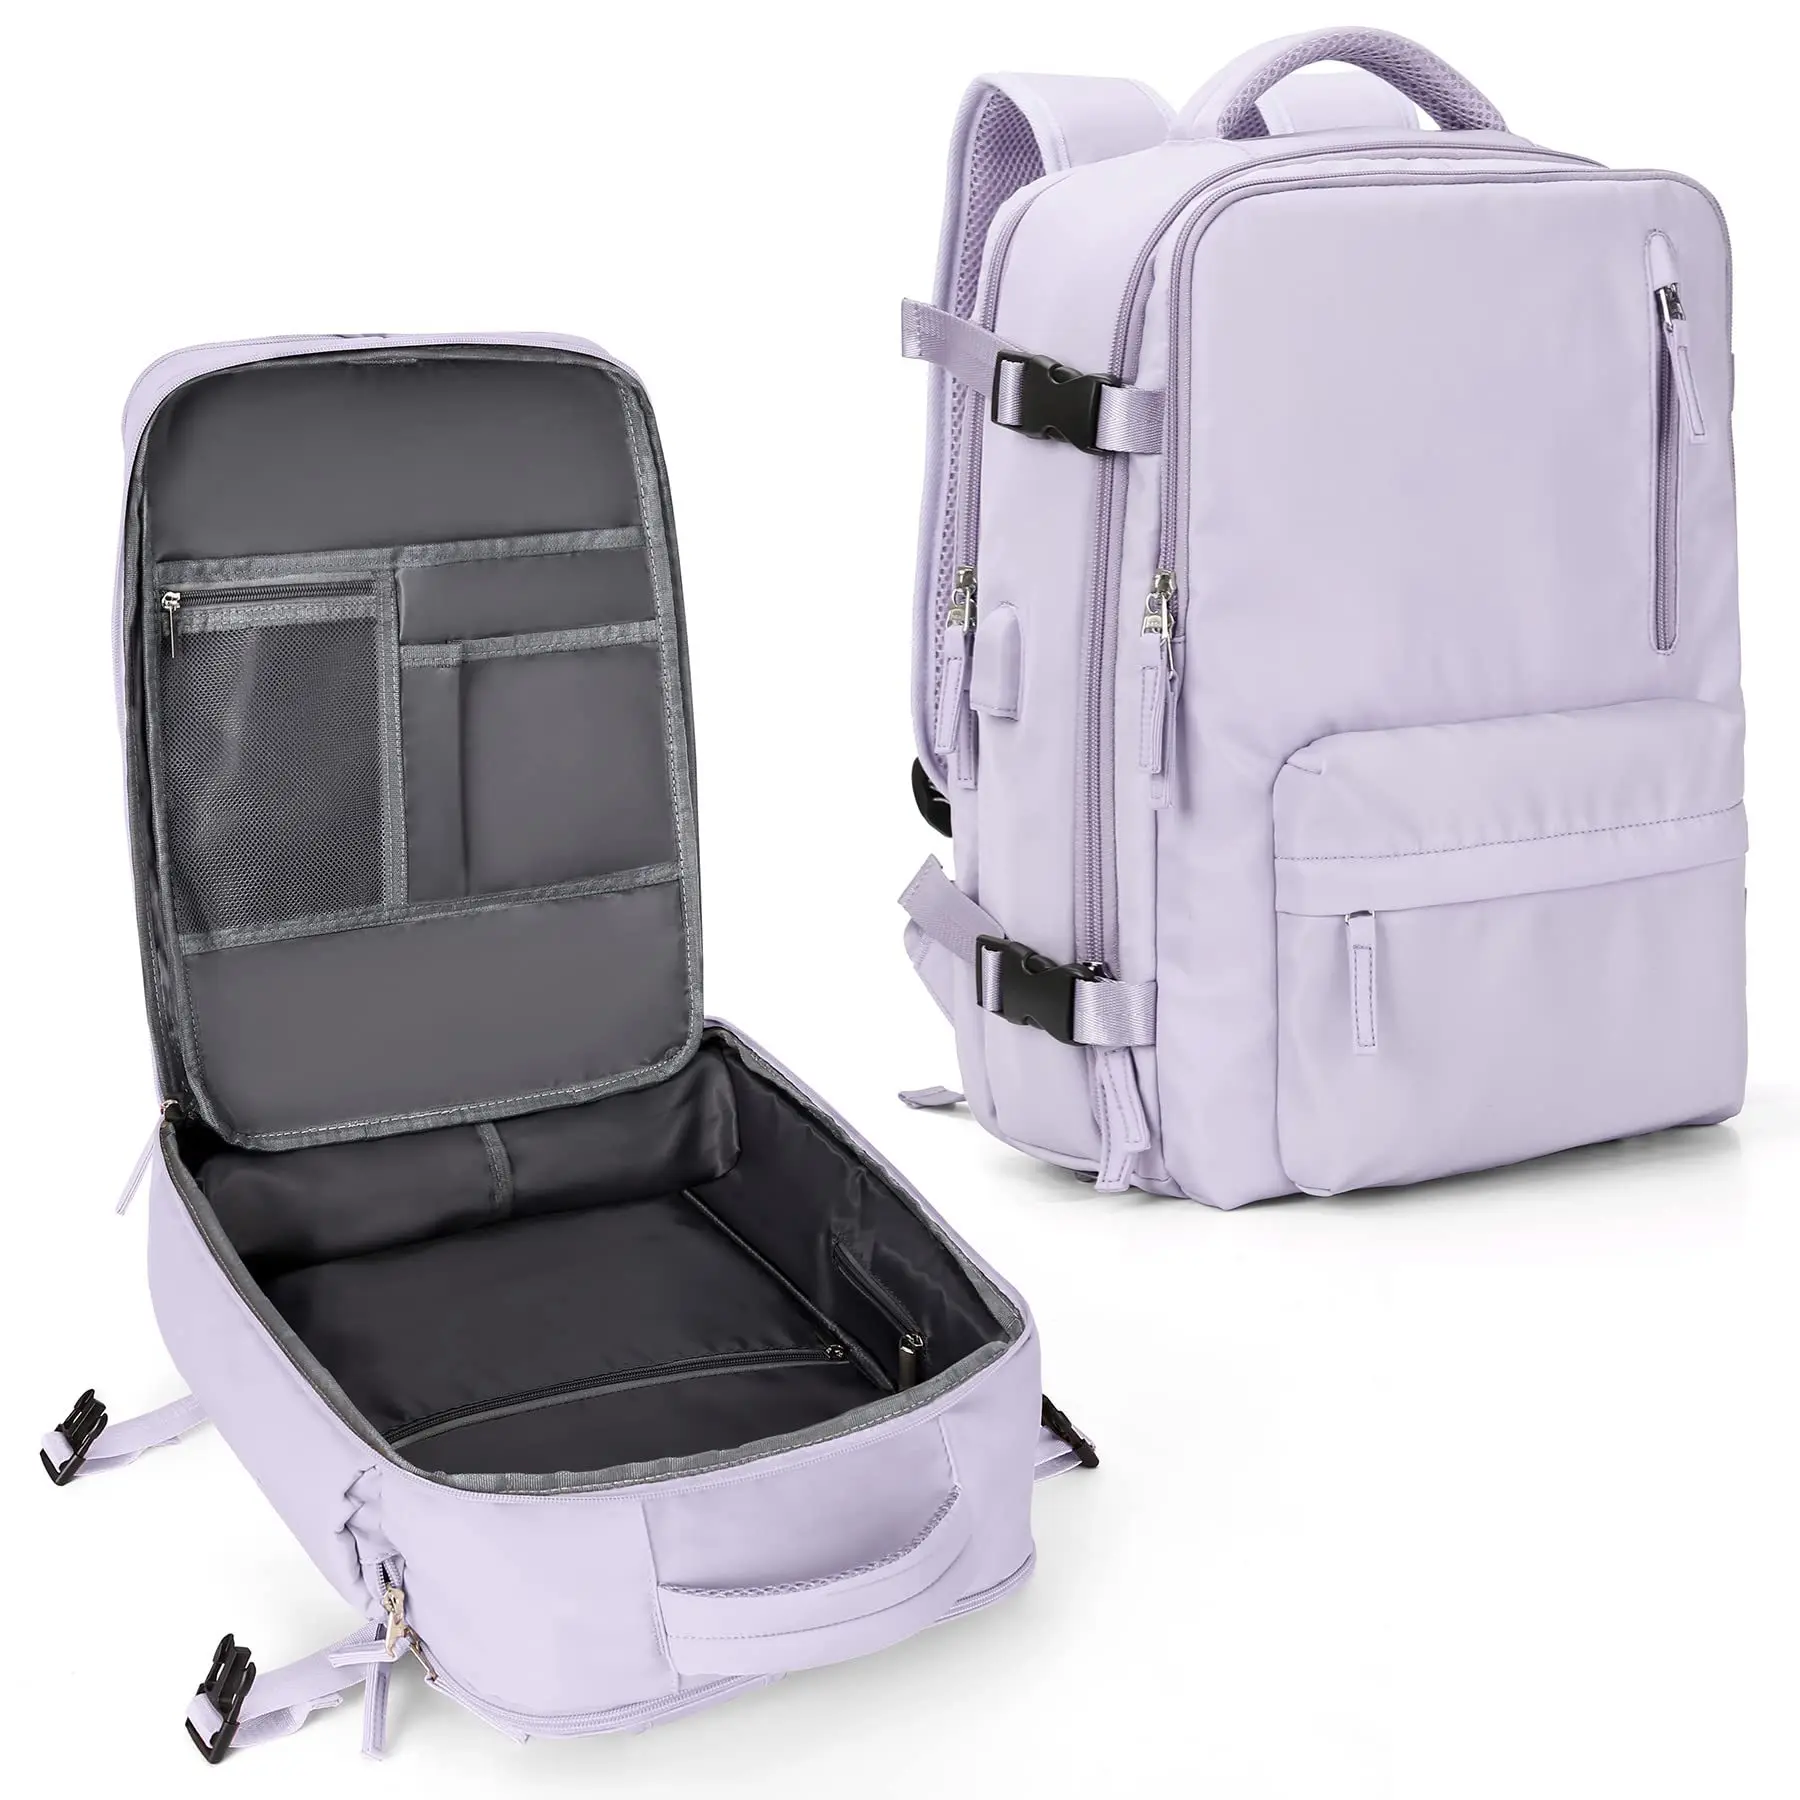 Lightweight Travel Large Capacity Women's Multifunctional Suitcase Bagpacks waterproof stylish Business Laptop USB Port Backpack